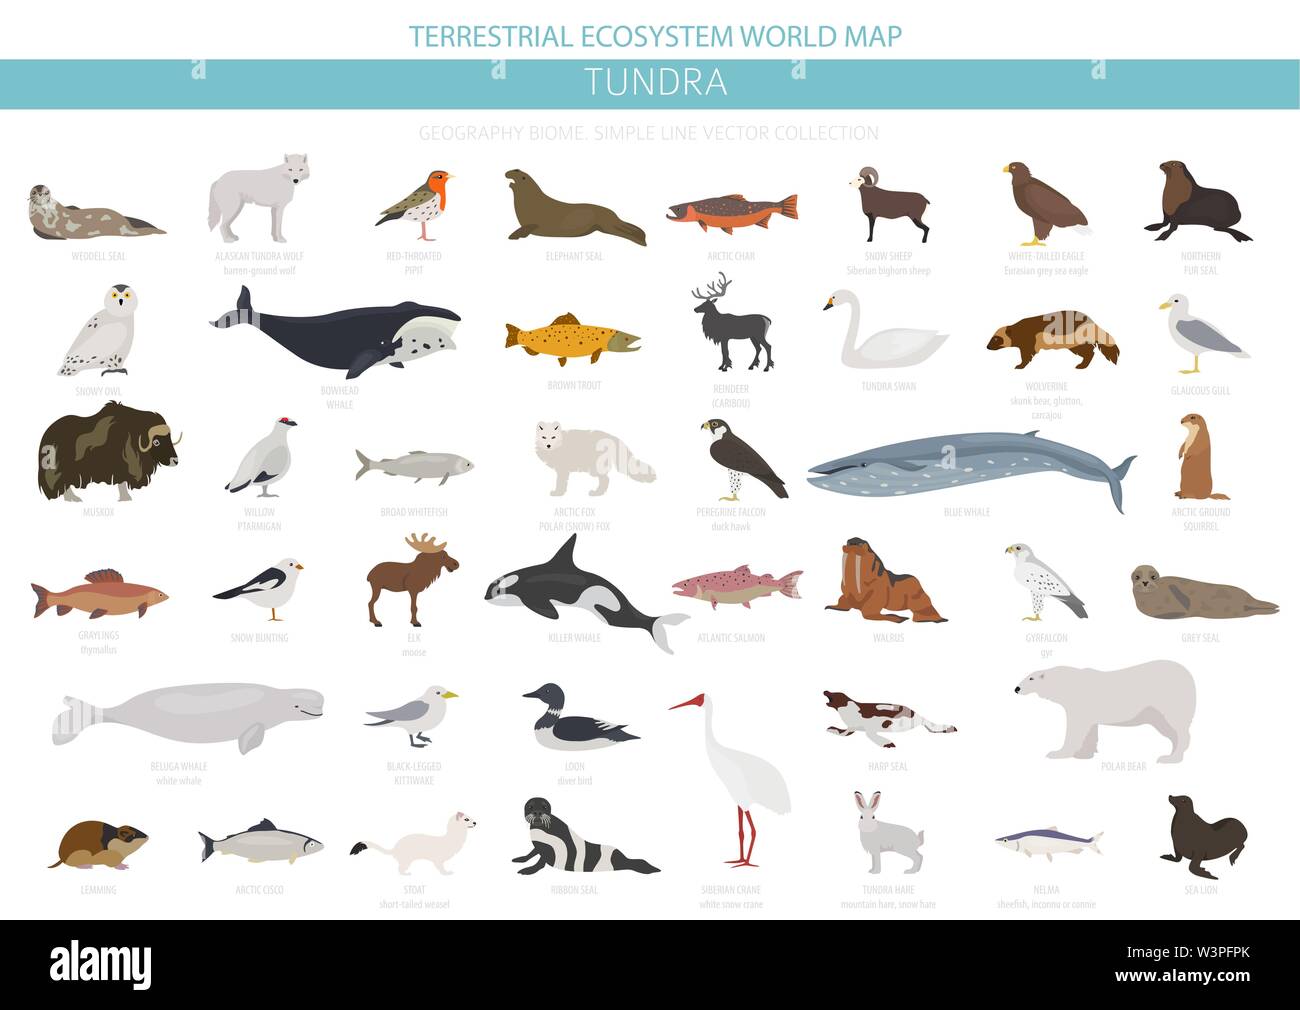 Tundra biome. Terrestrial ecosystem world map. Arctic animals, birds, fish and plants infographic design. Vector illustration Stock Vector